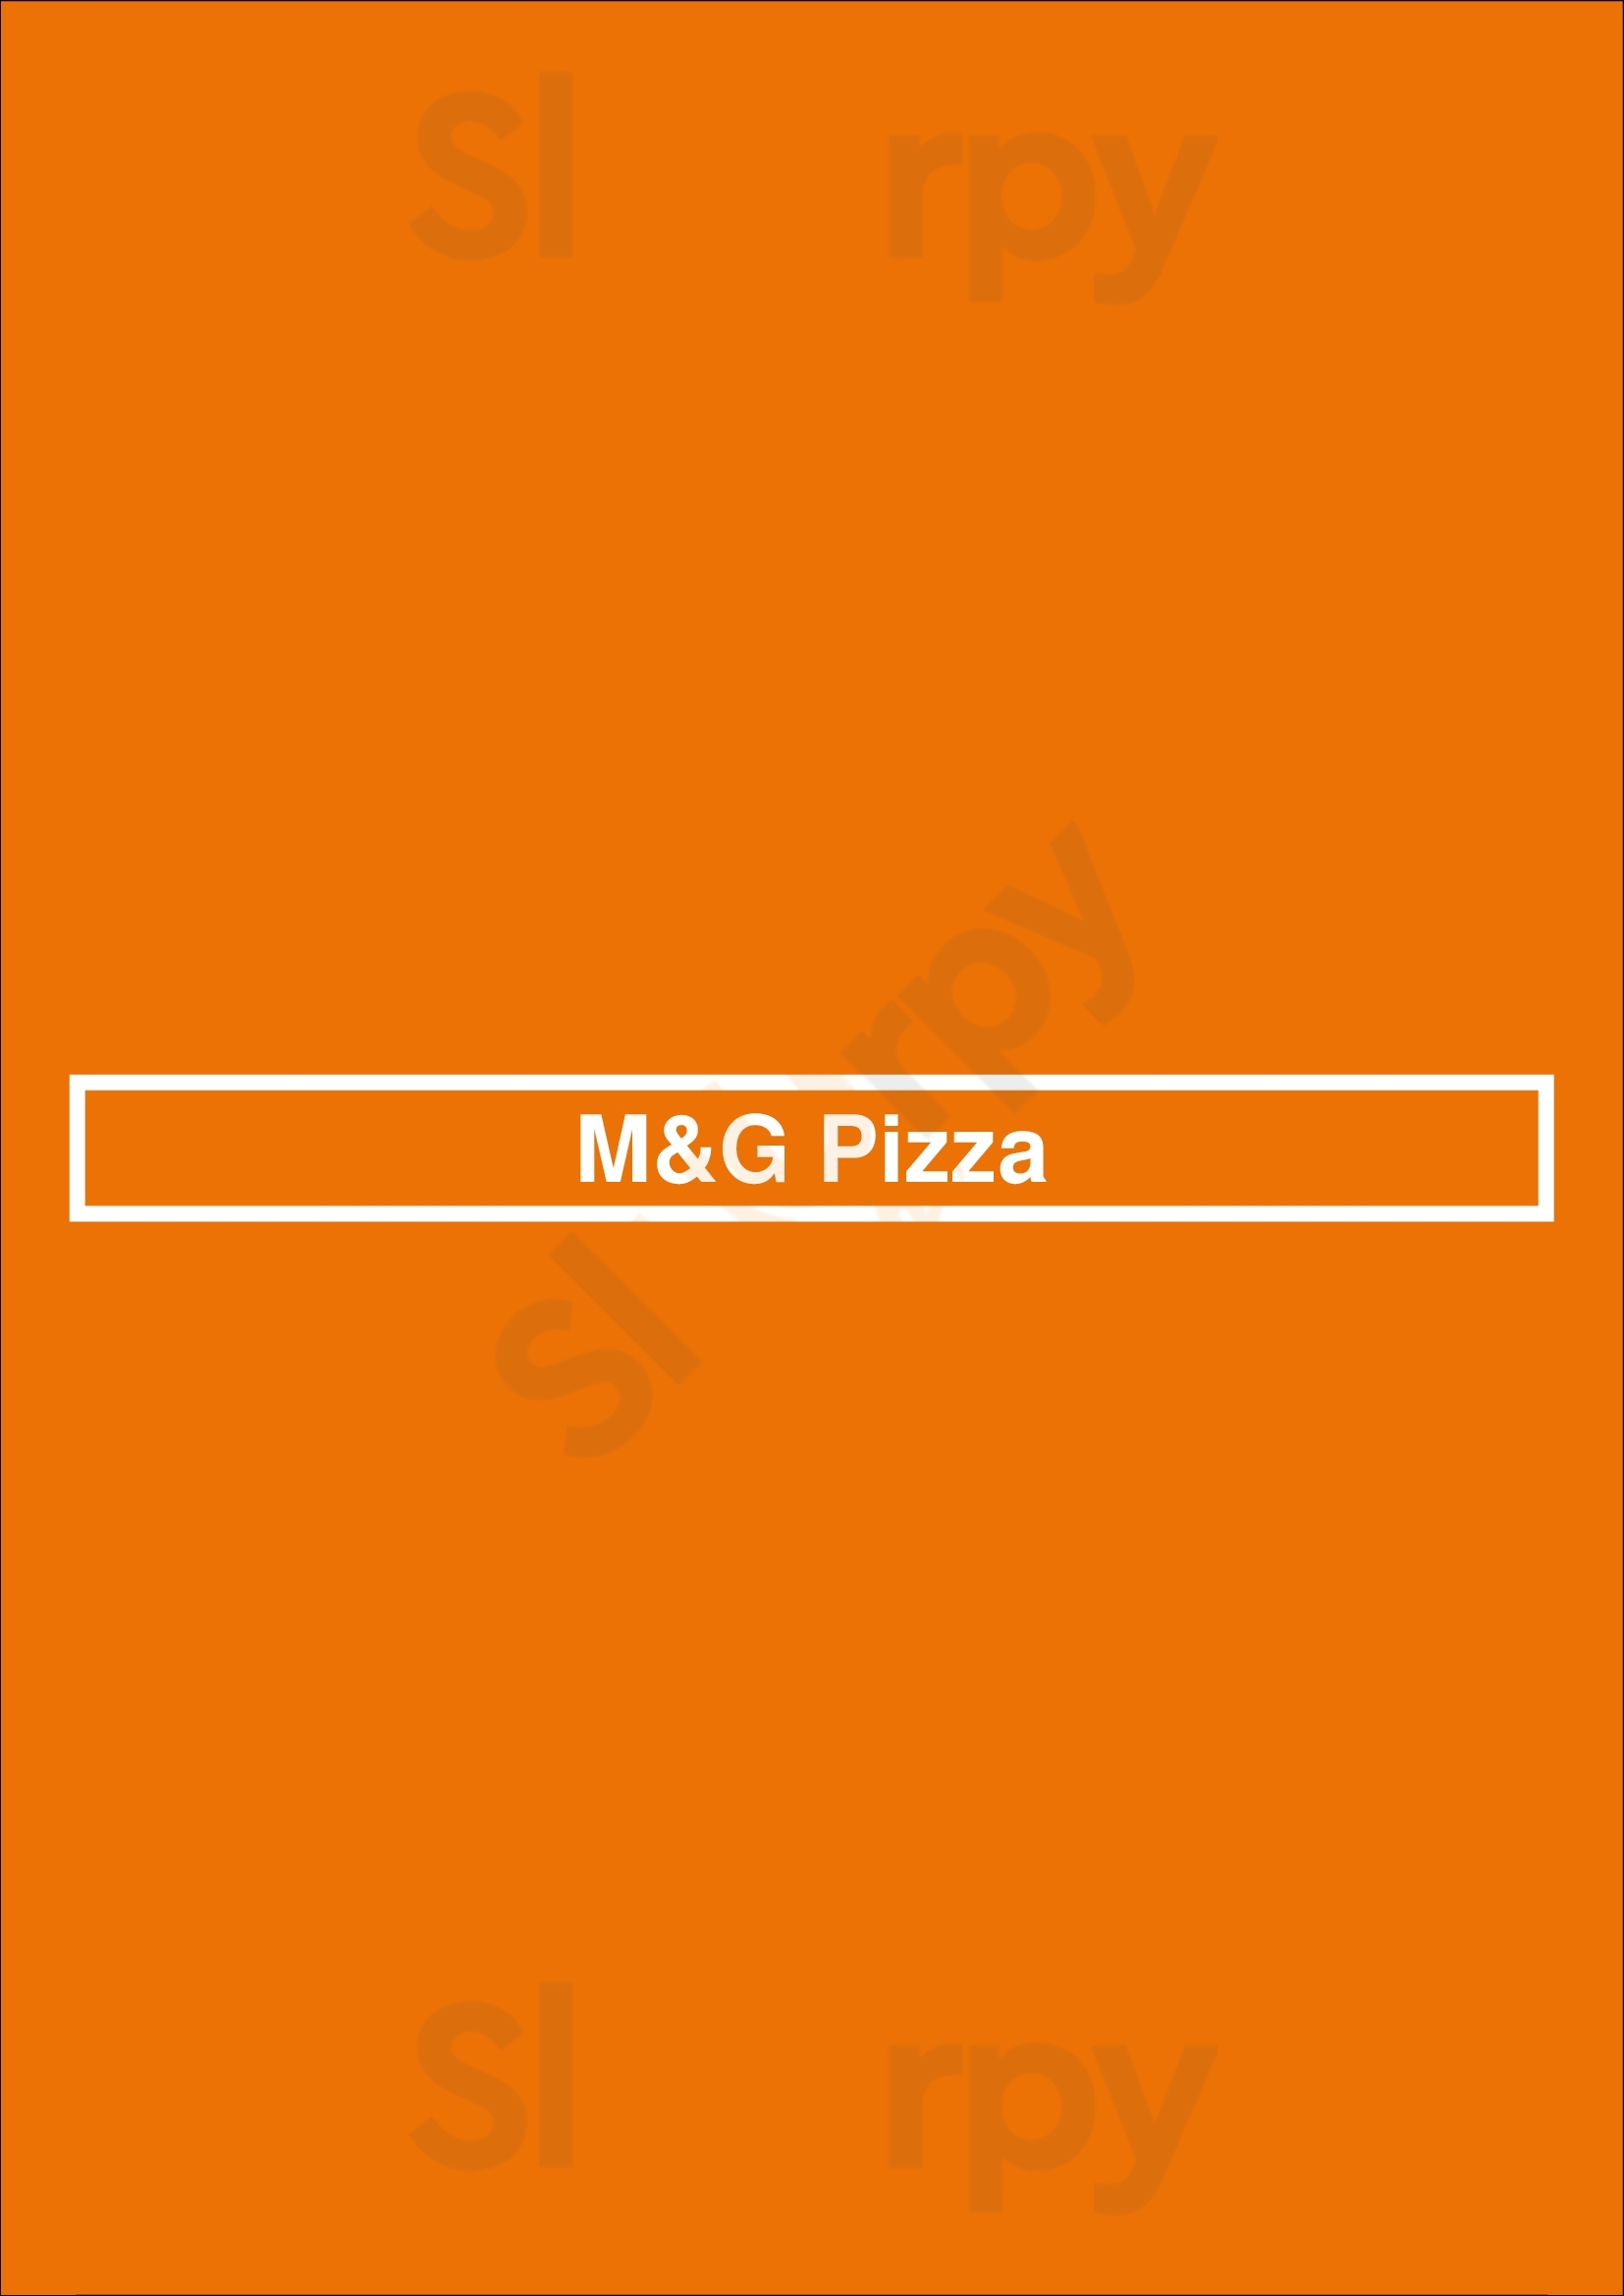 M&g Pizza Chicago Menu - 1